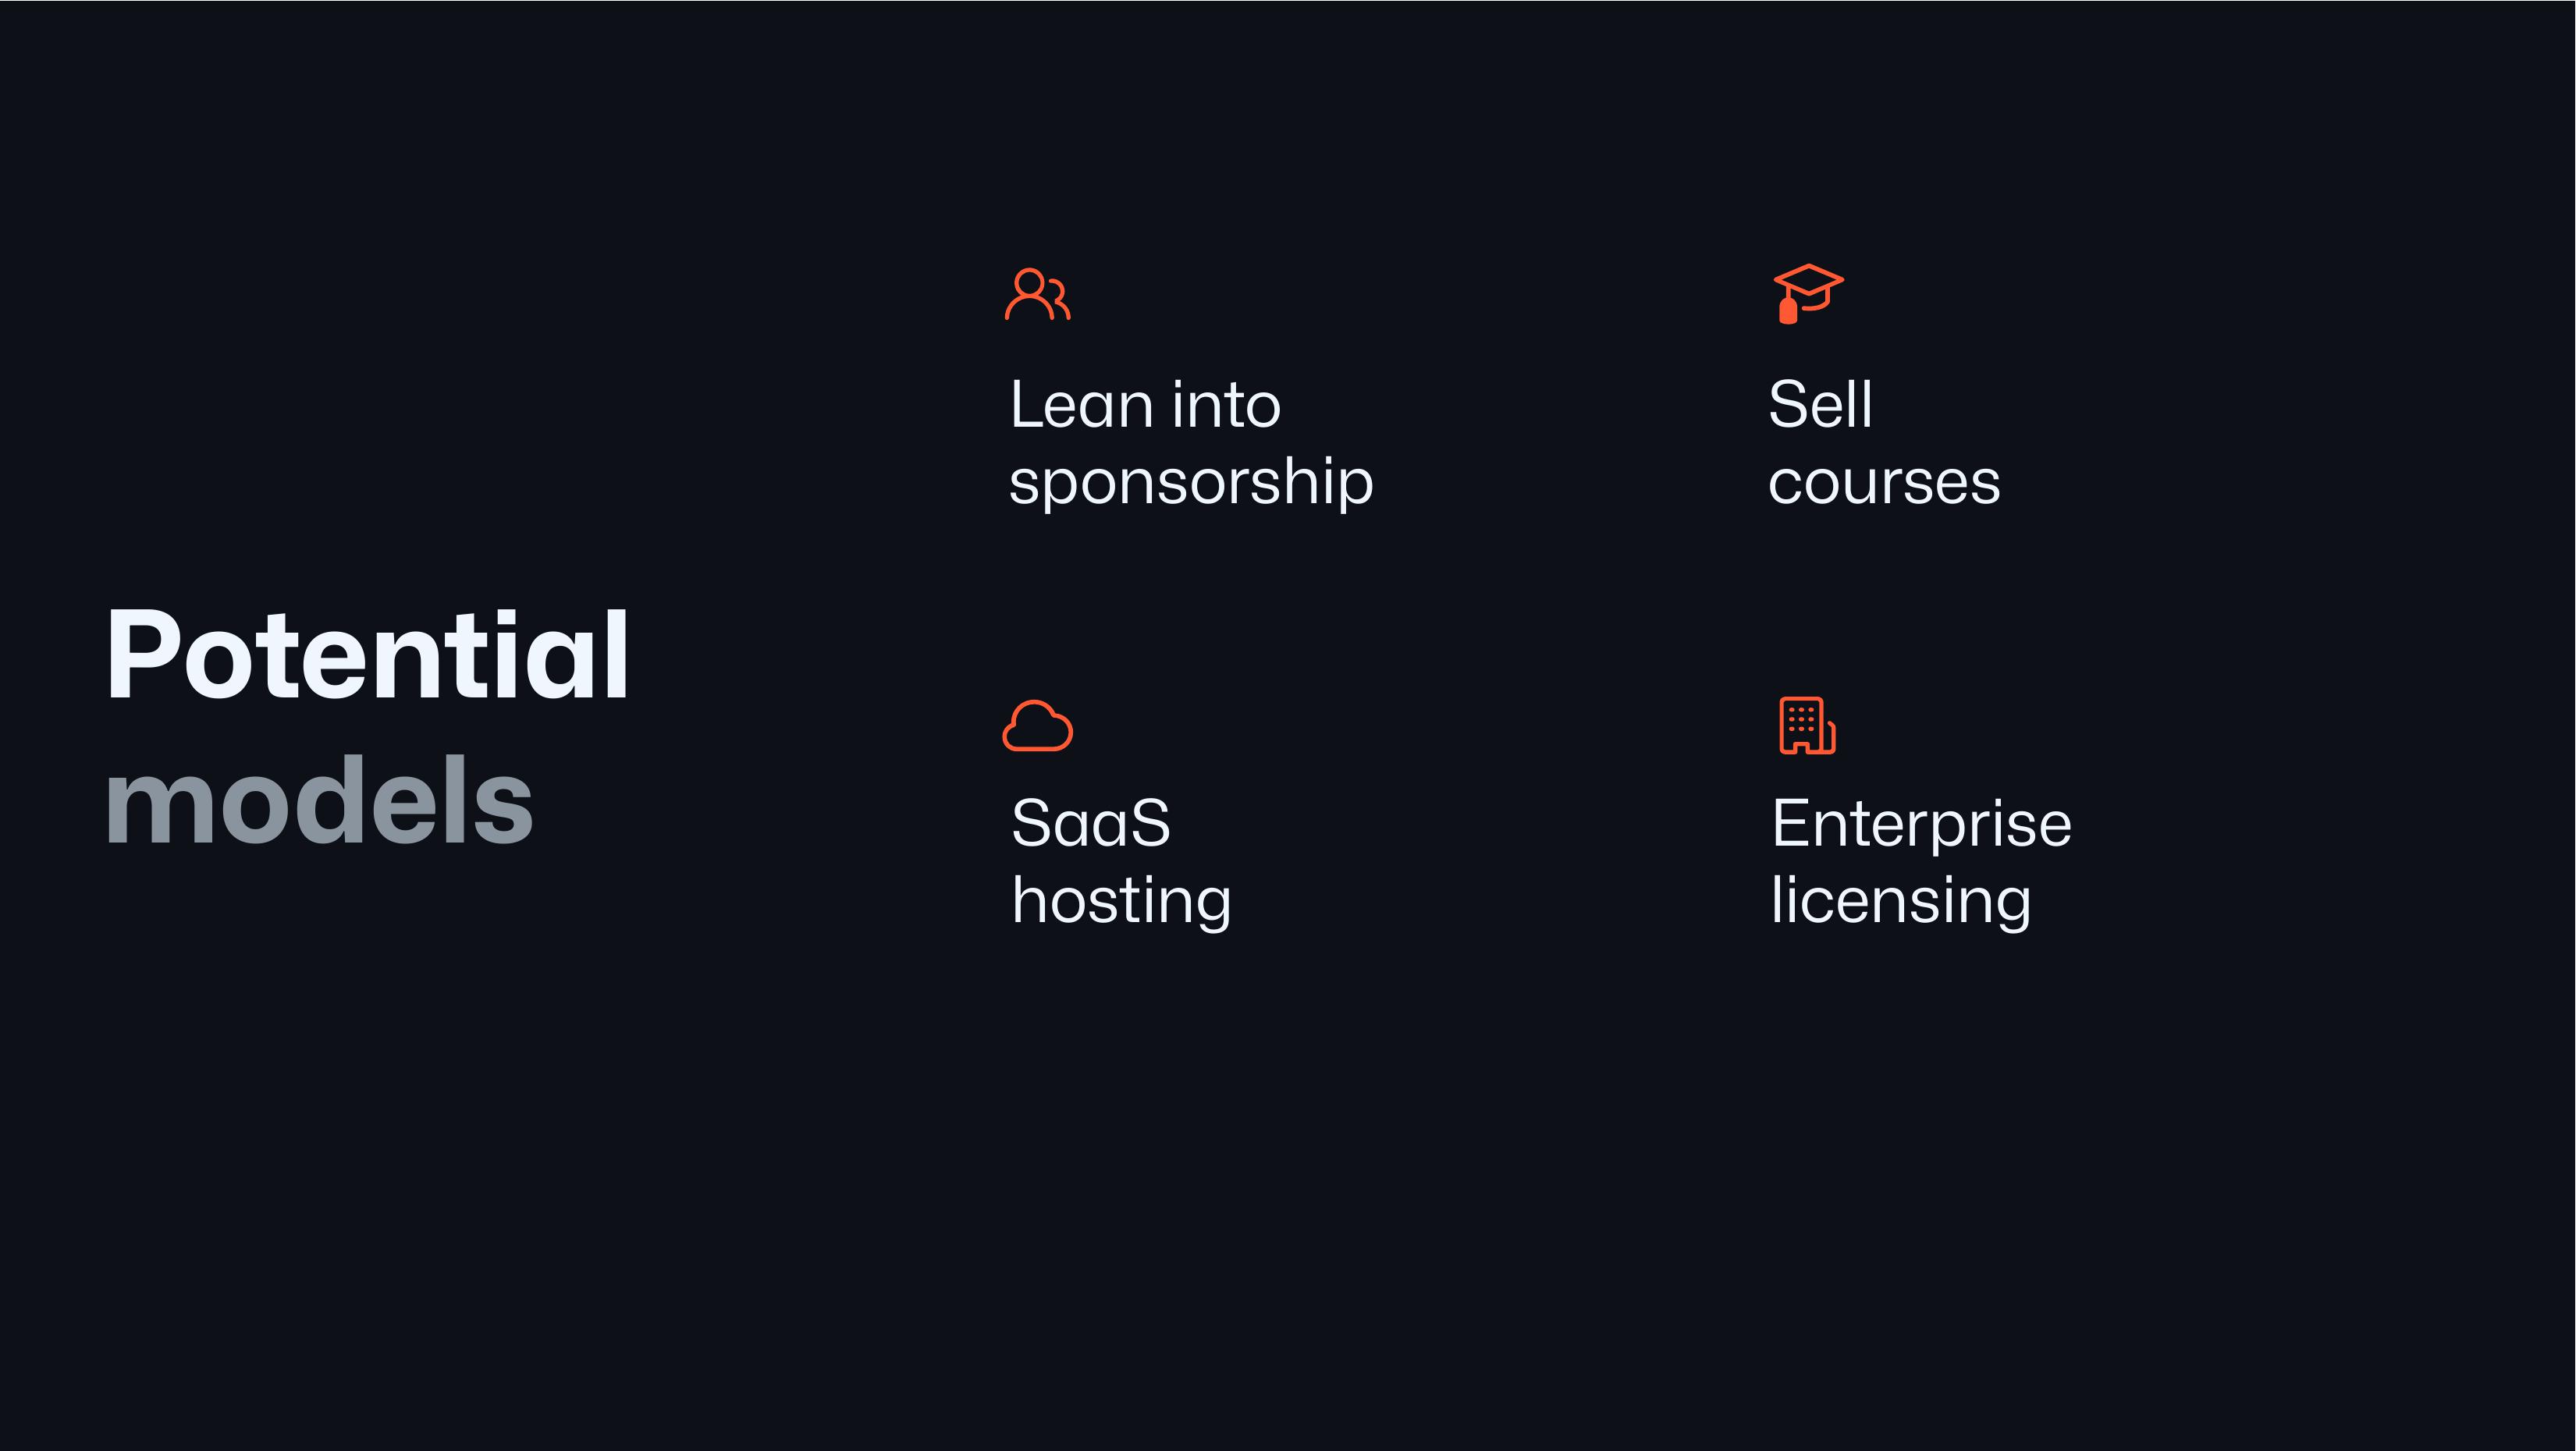 Potential models:  Lean into sponsorship  Sell courses  SaaS hosting  Enterprise licensing